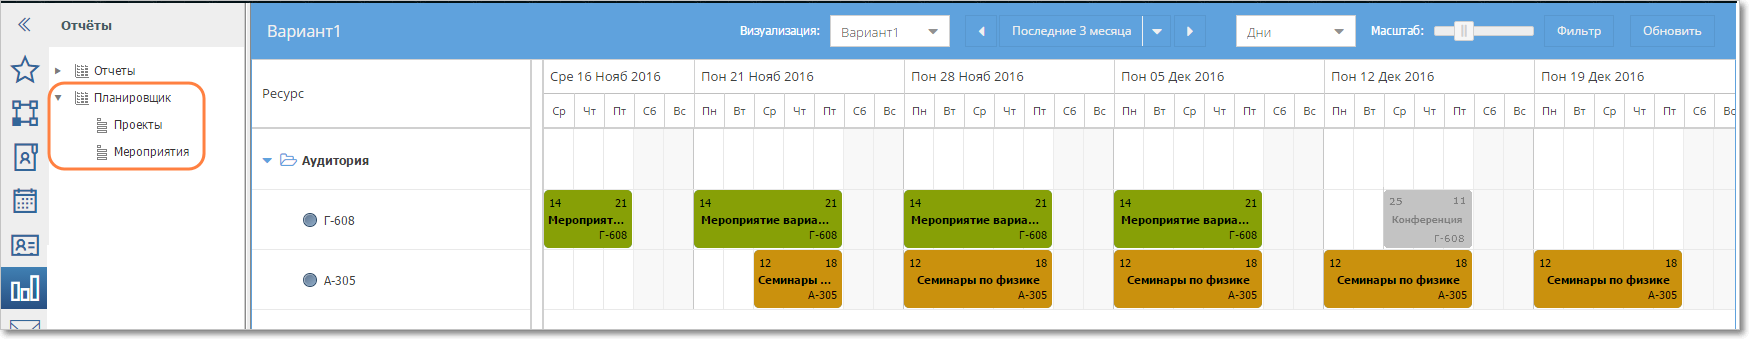 timetable_2